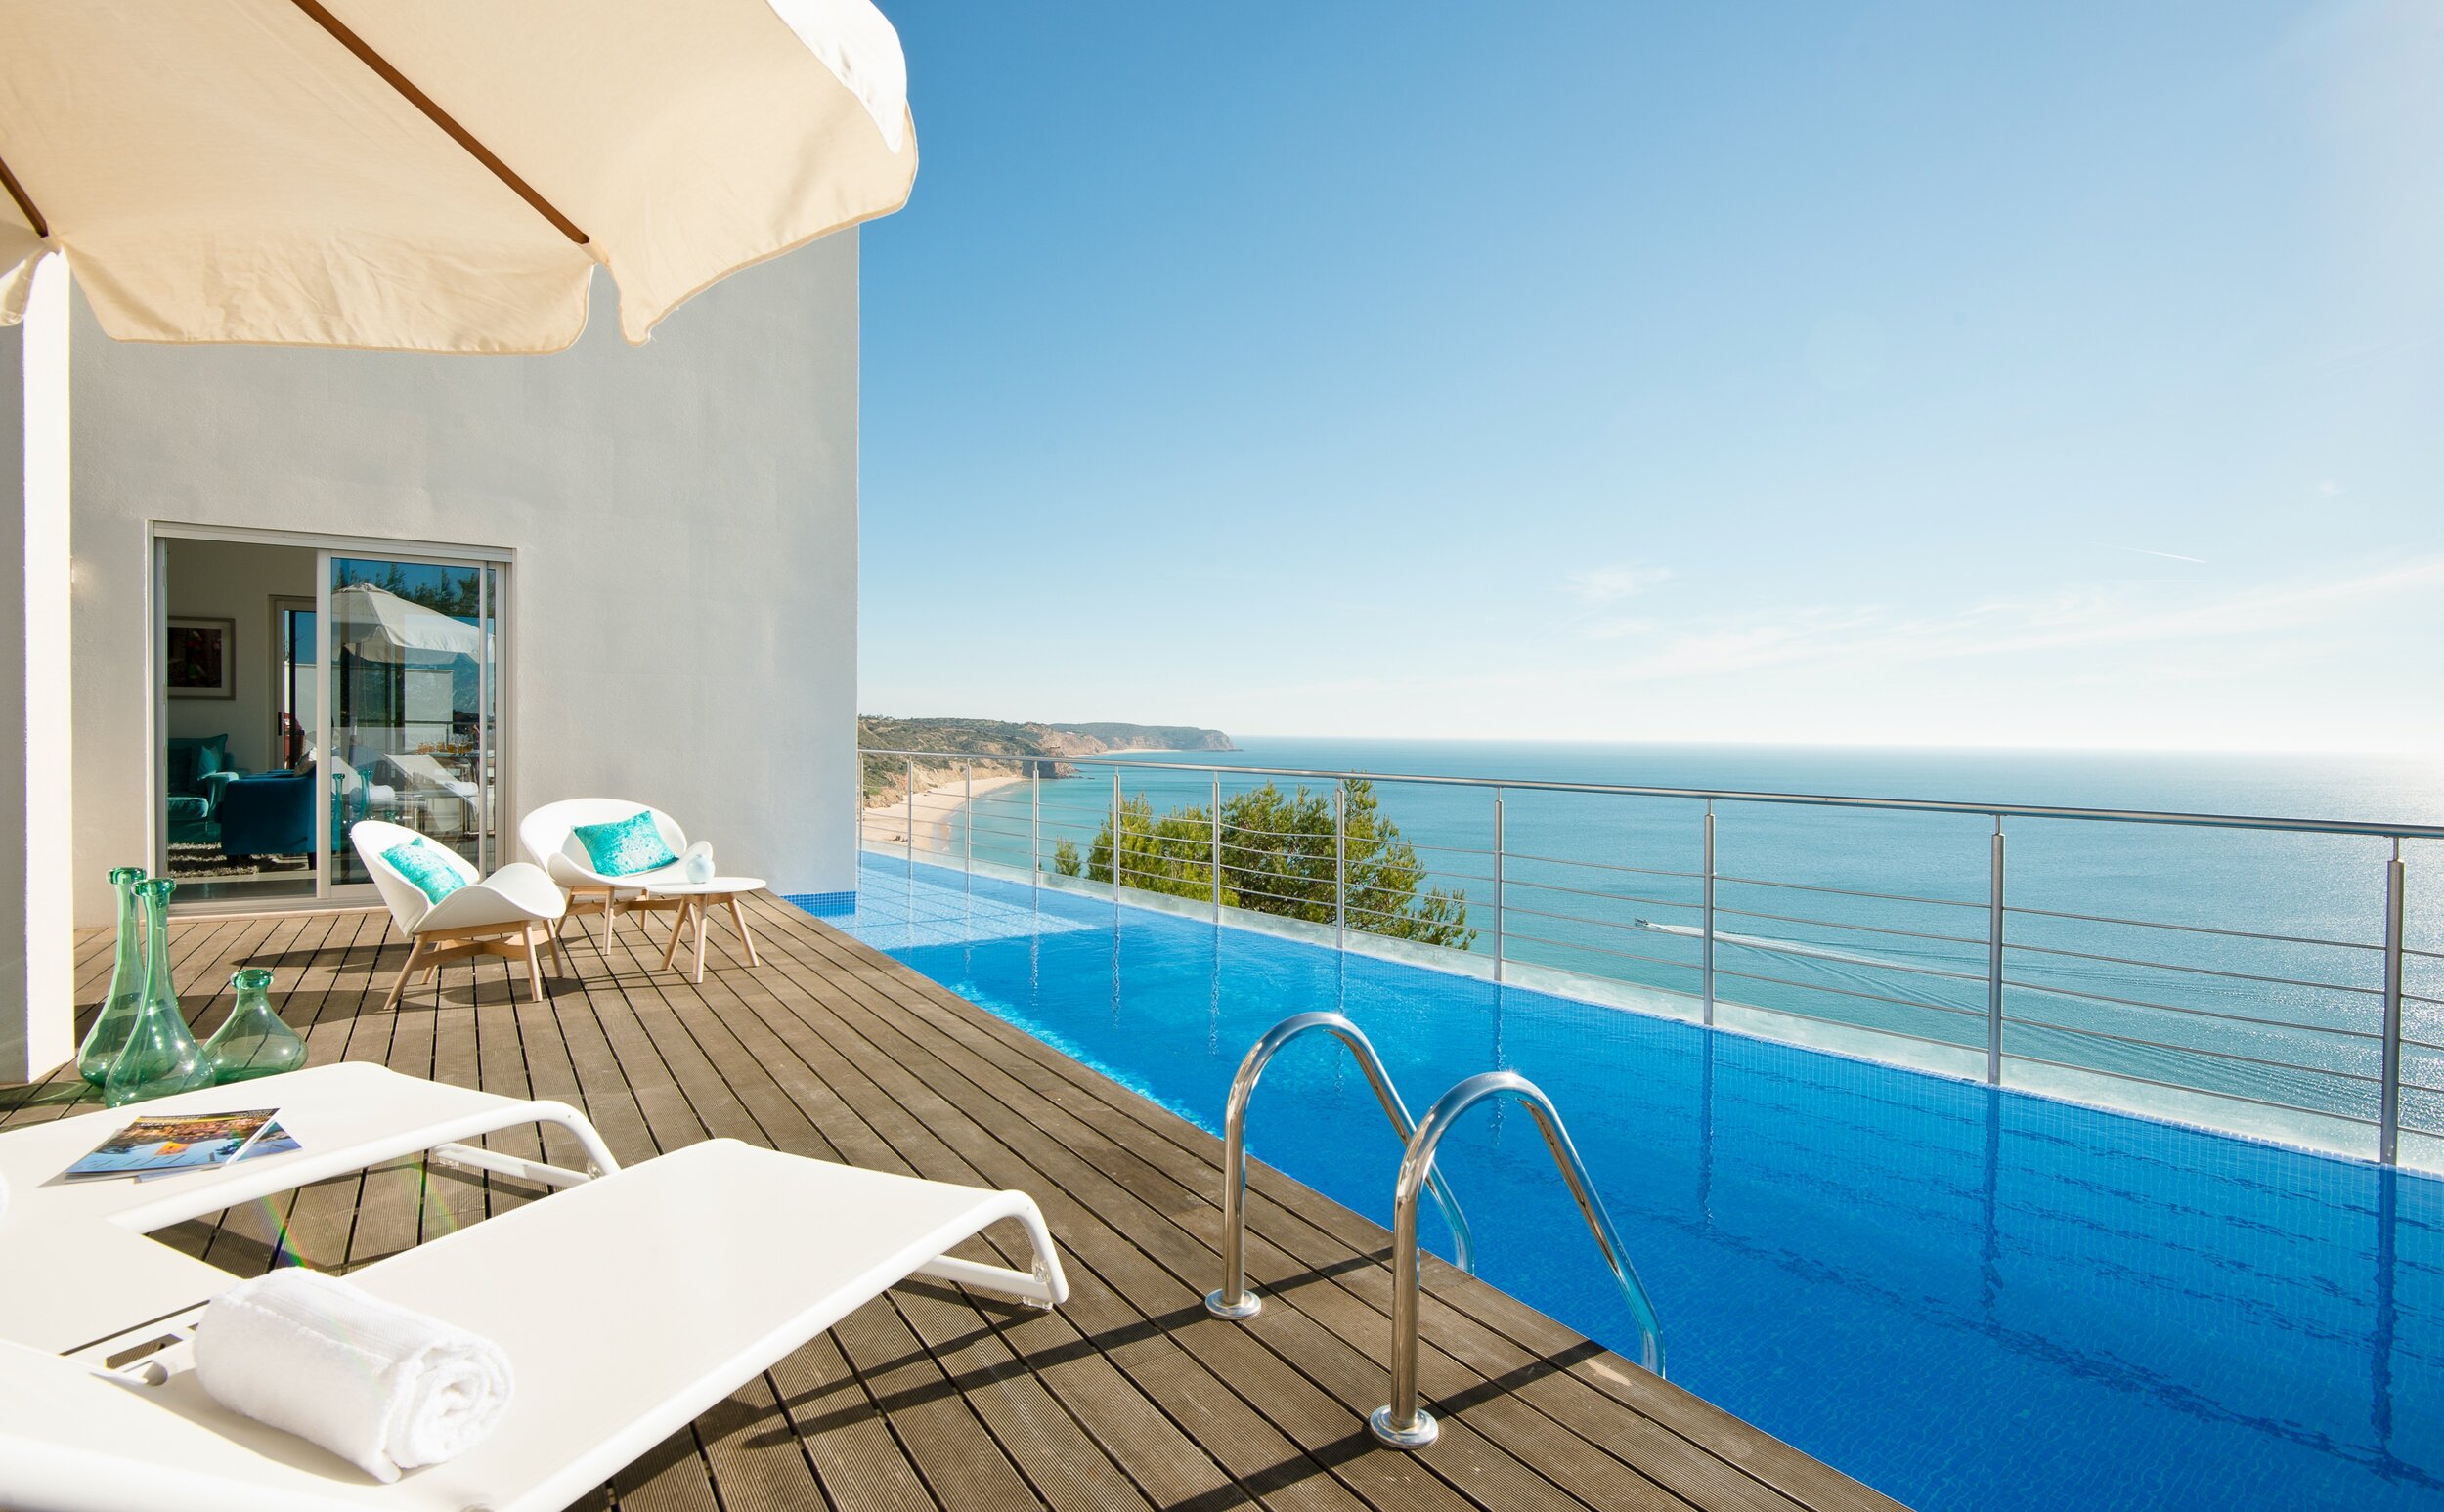 Villa Mar Azul - Plunge pool view 1.jpg